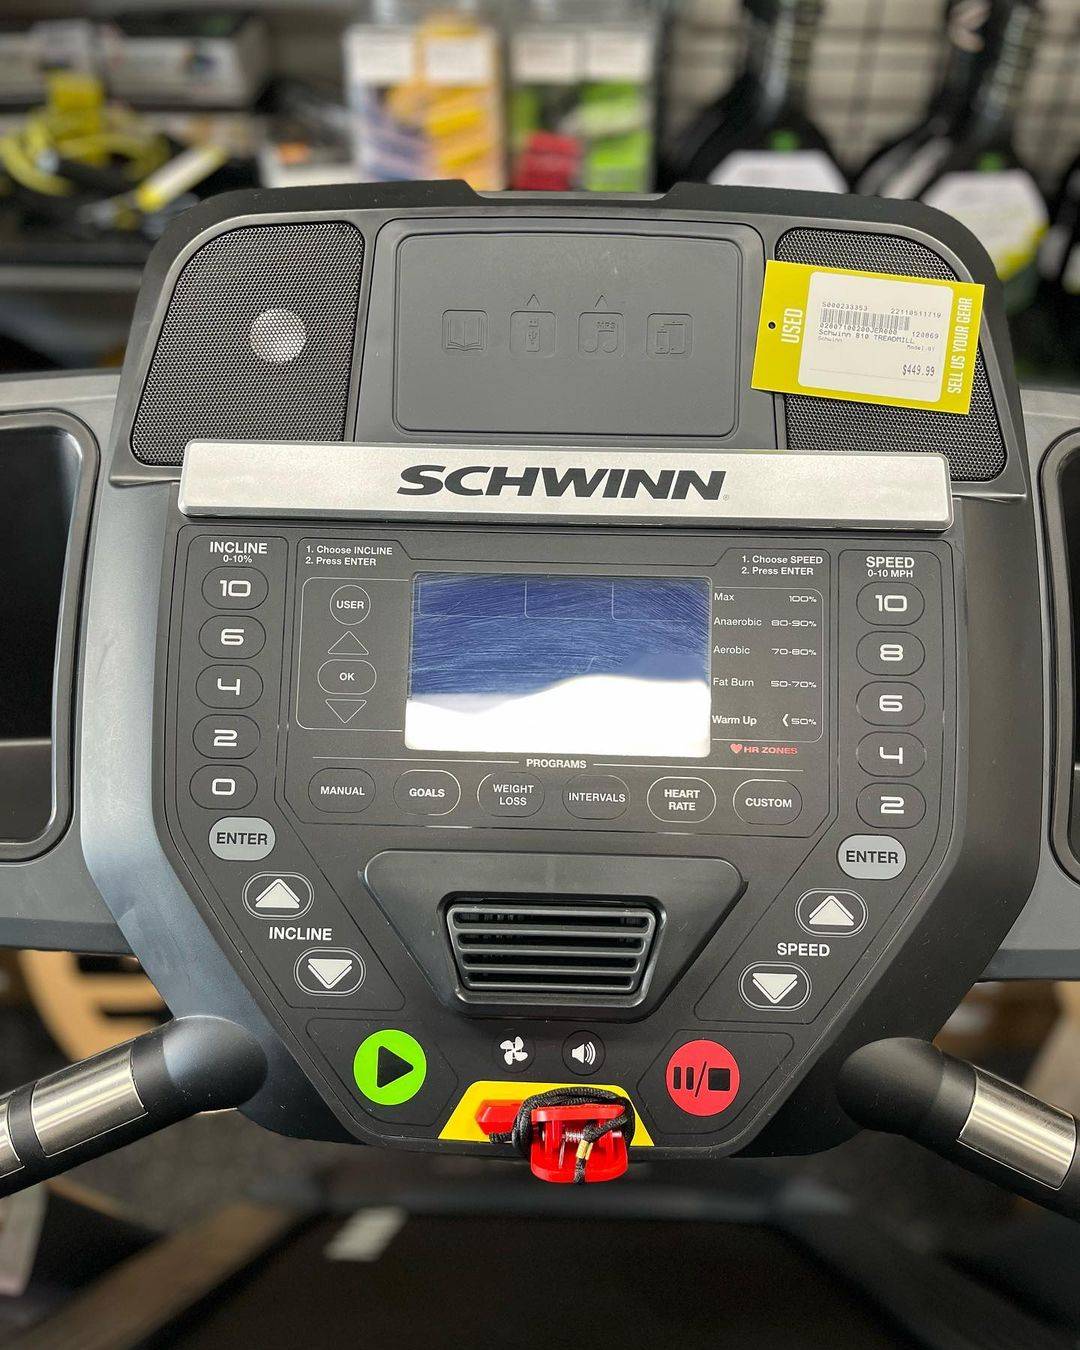 Schwinn 810 Treadmill instagram